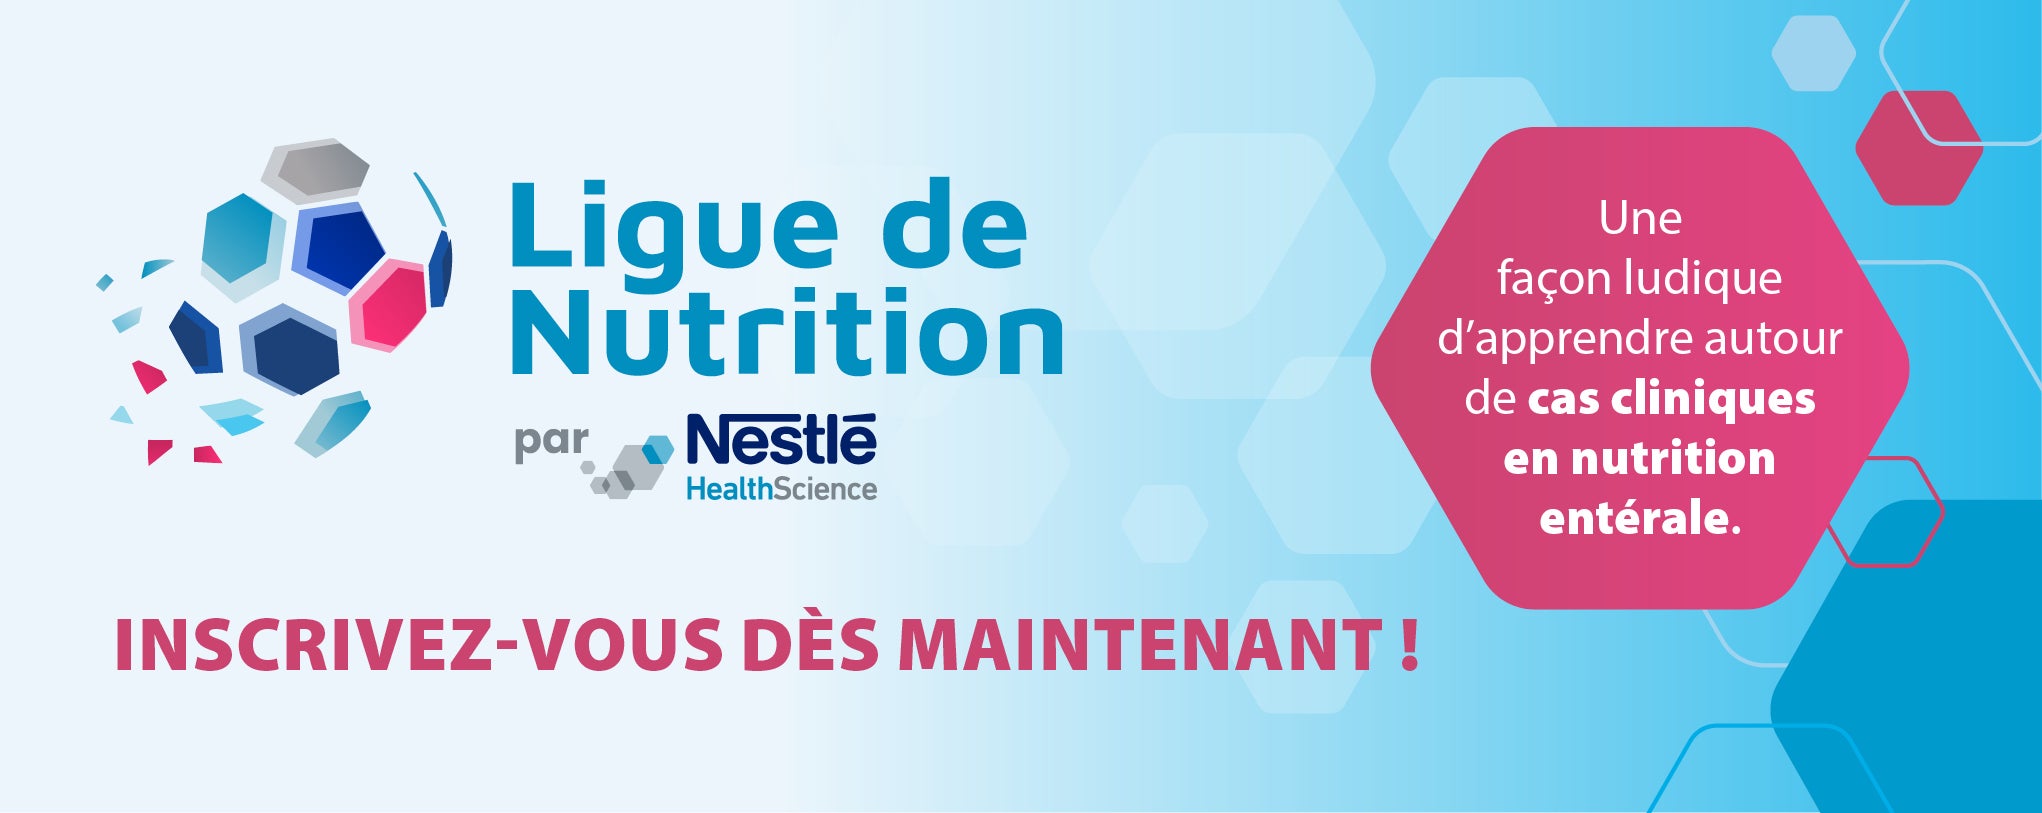 Ligue de Nutrition Nestlé Health Science